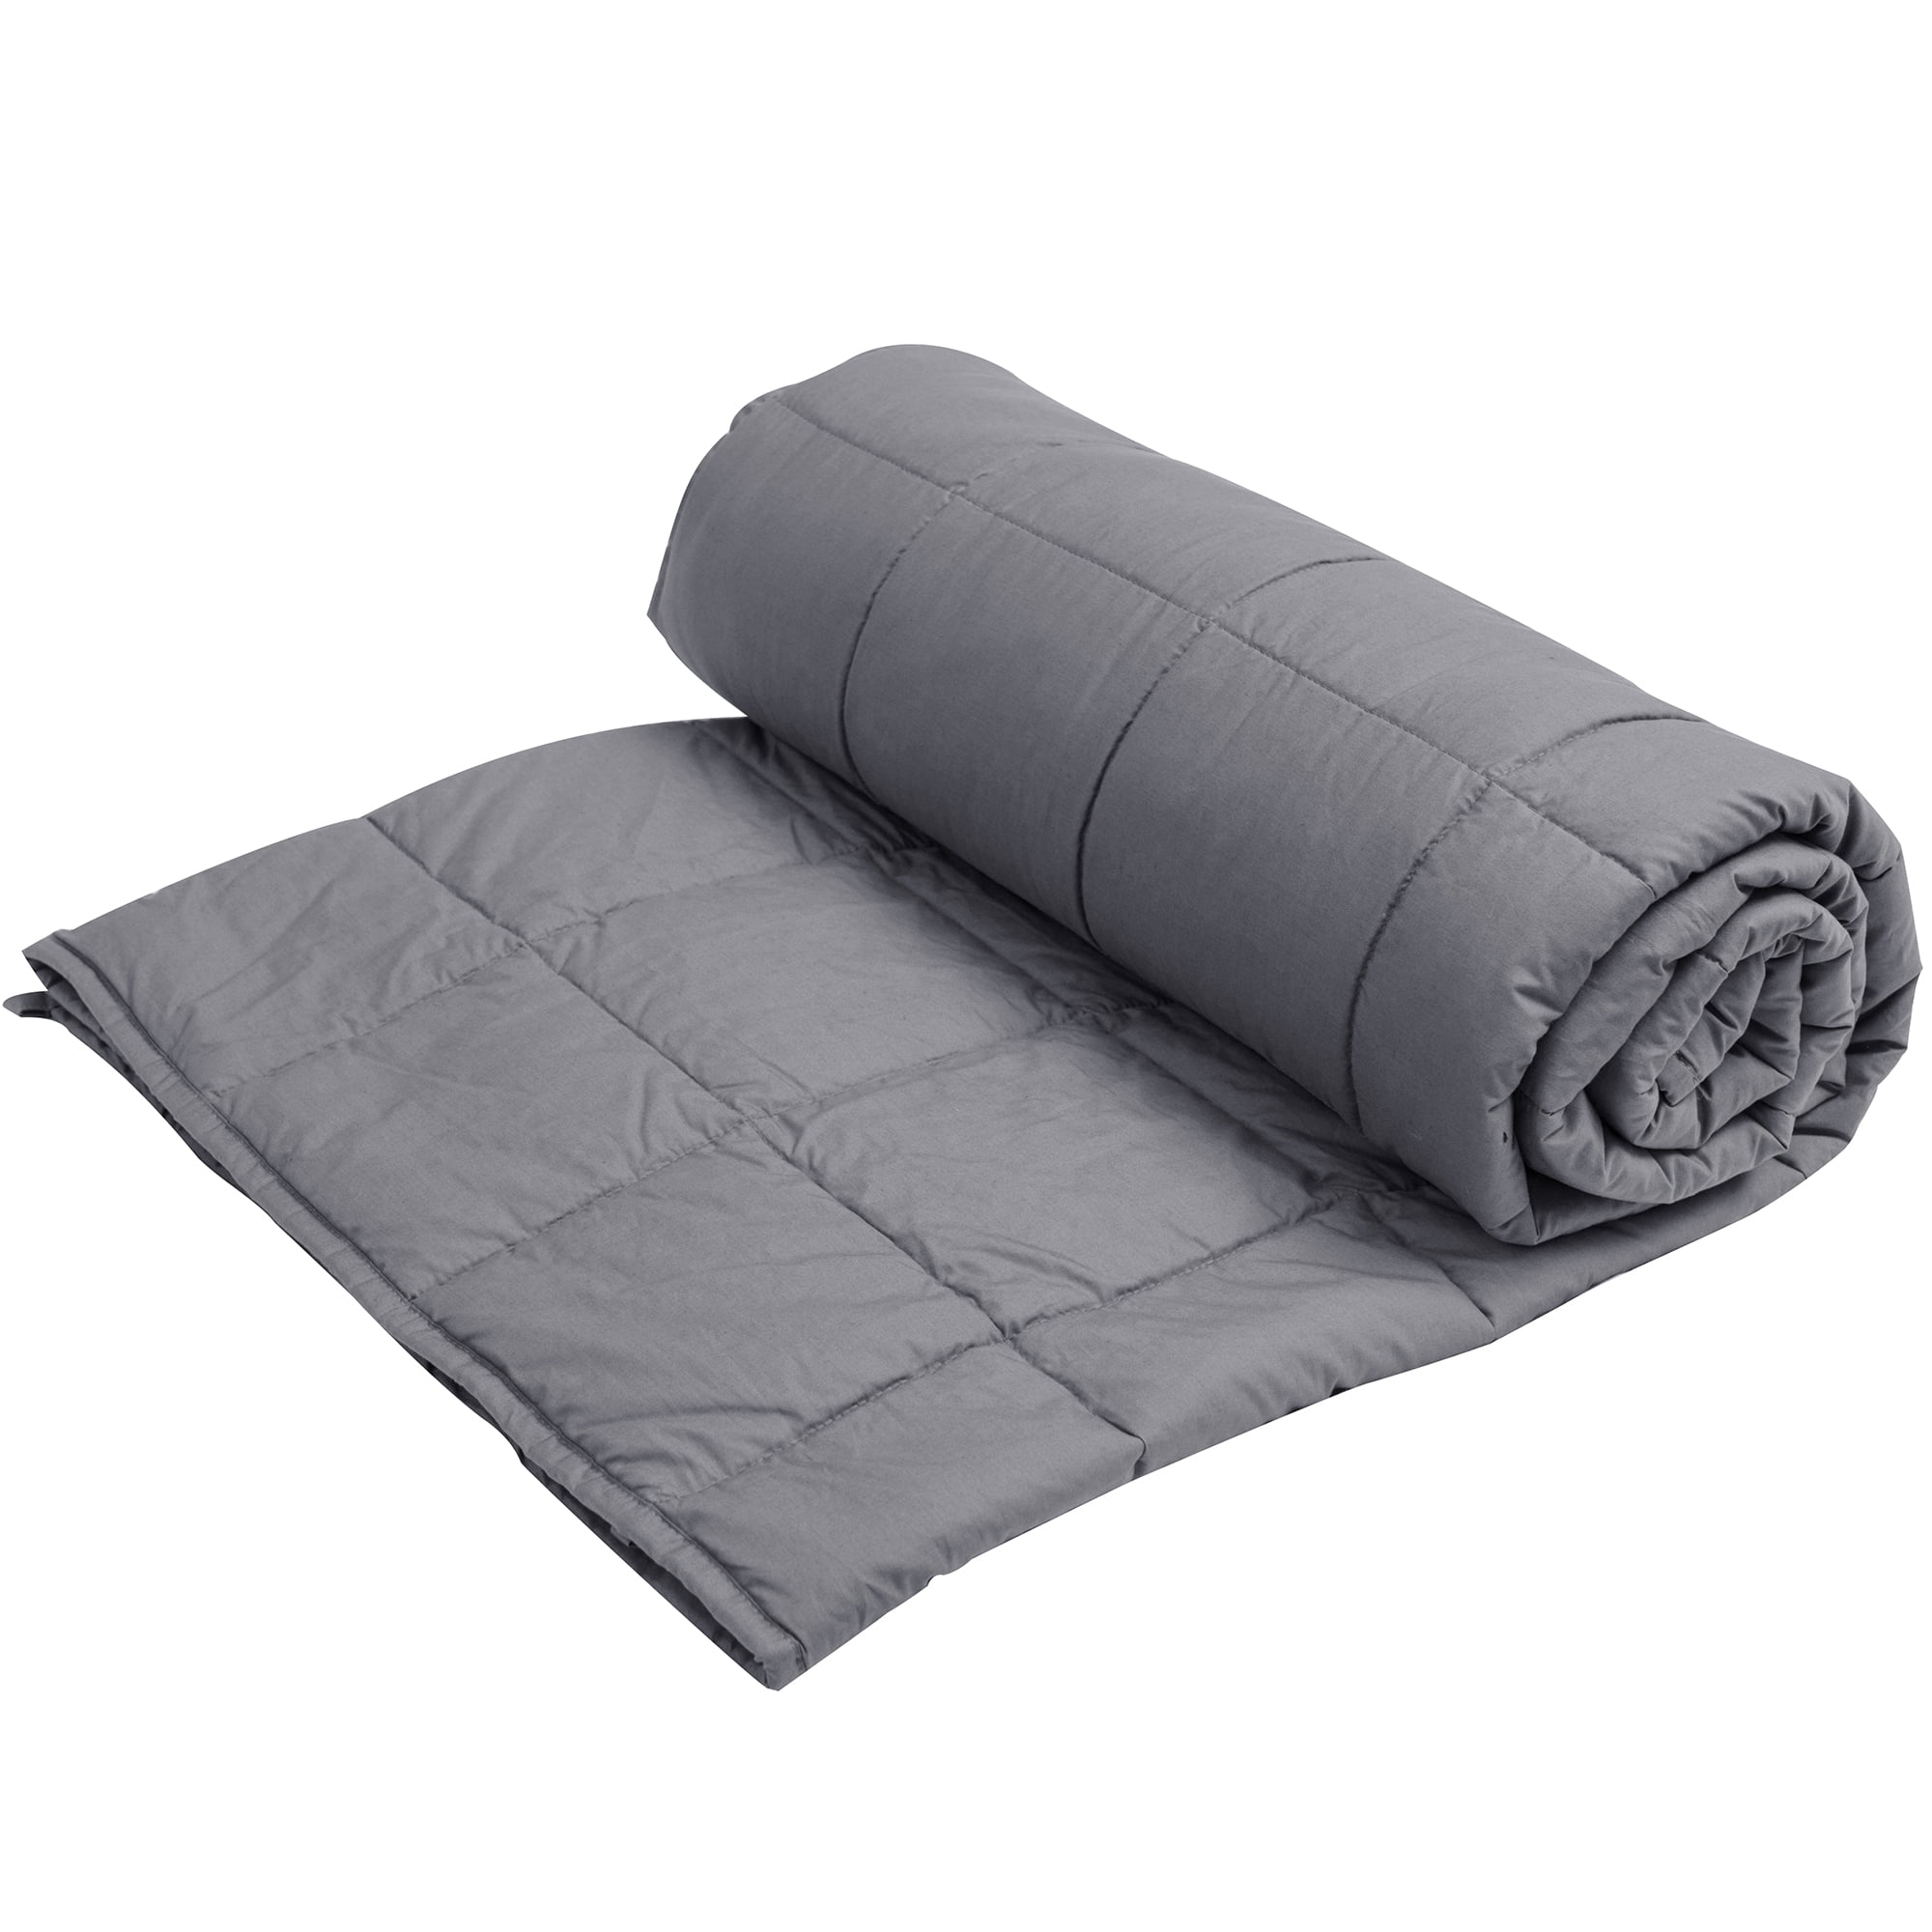 Puredown 25LB Dark Gray Weighted Blanket For Natural Deep Sleep, Reduce